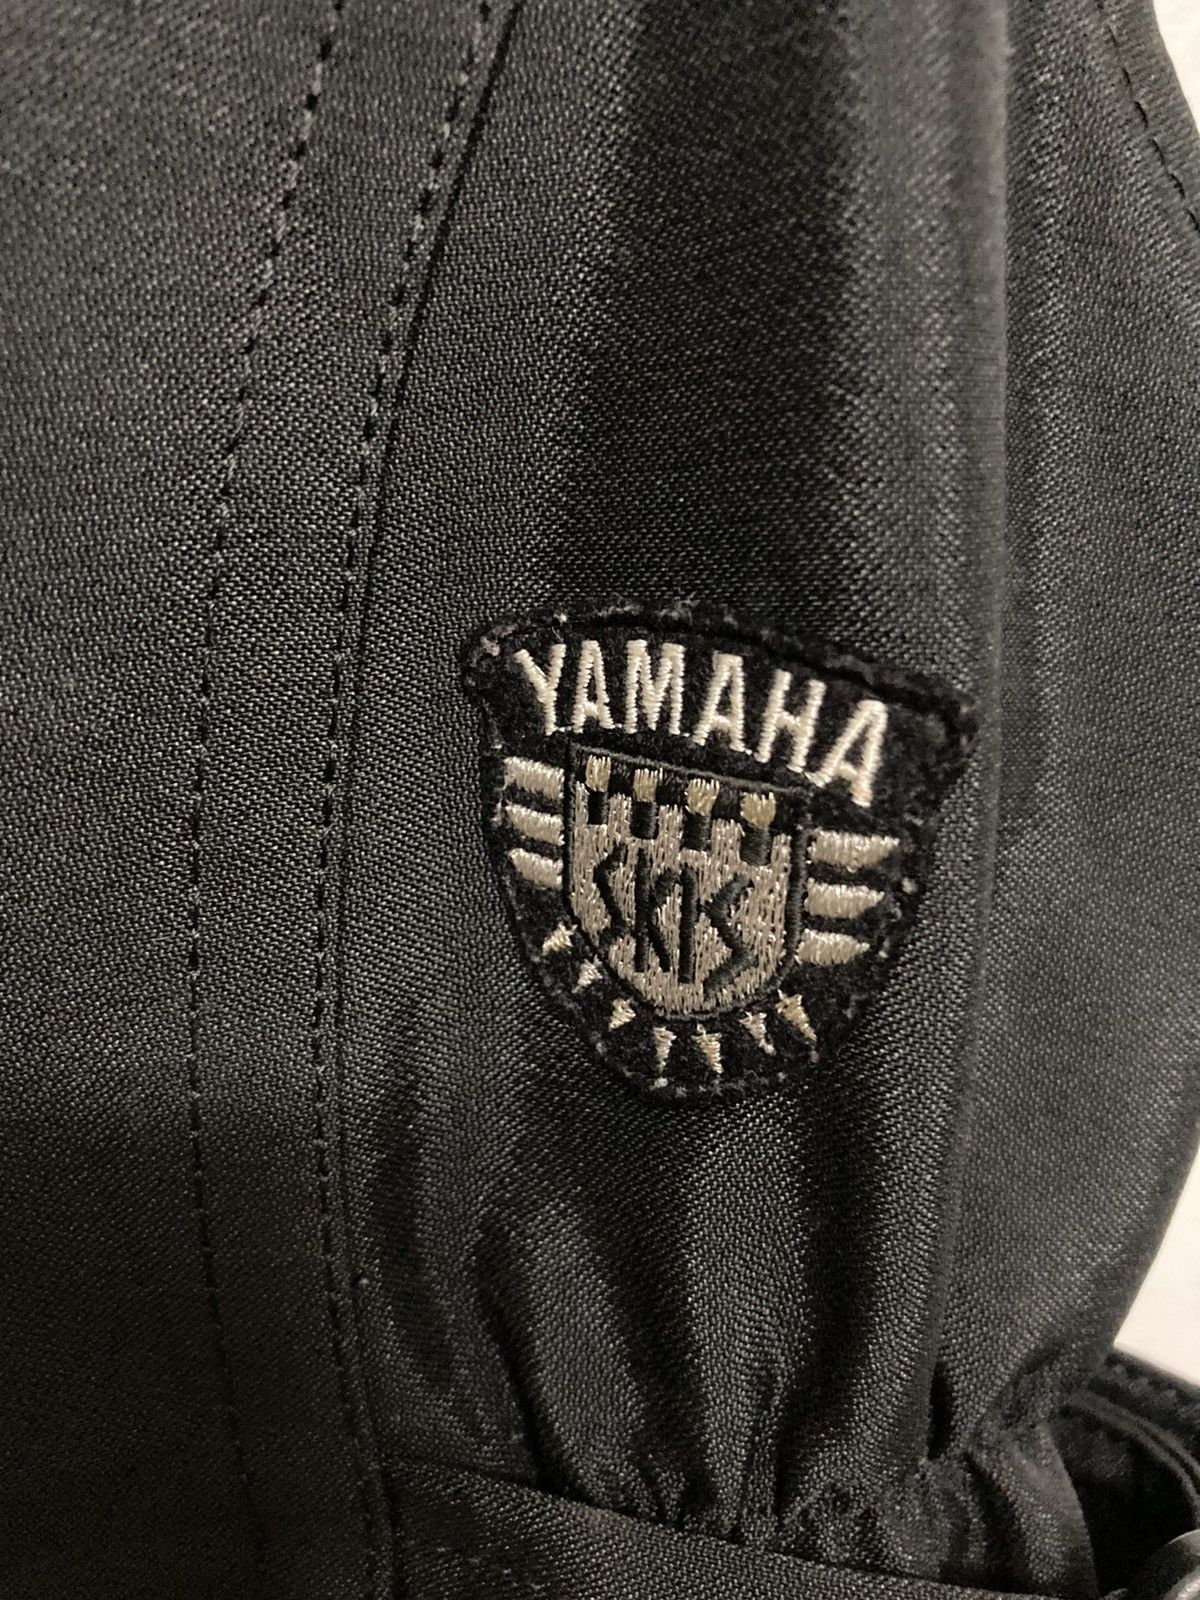 Yamaha Ski Jumpsuit Pants - 12